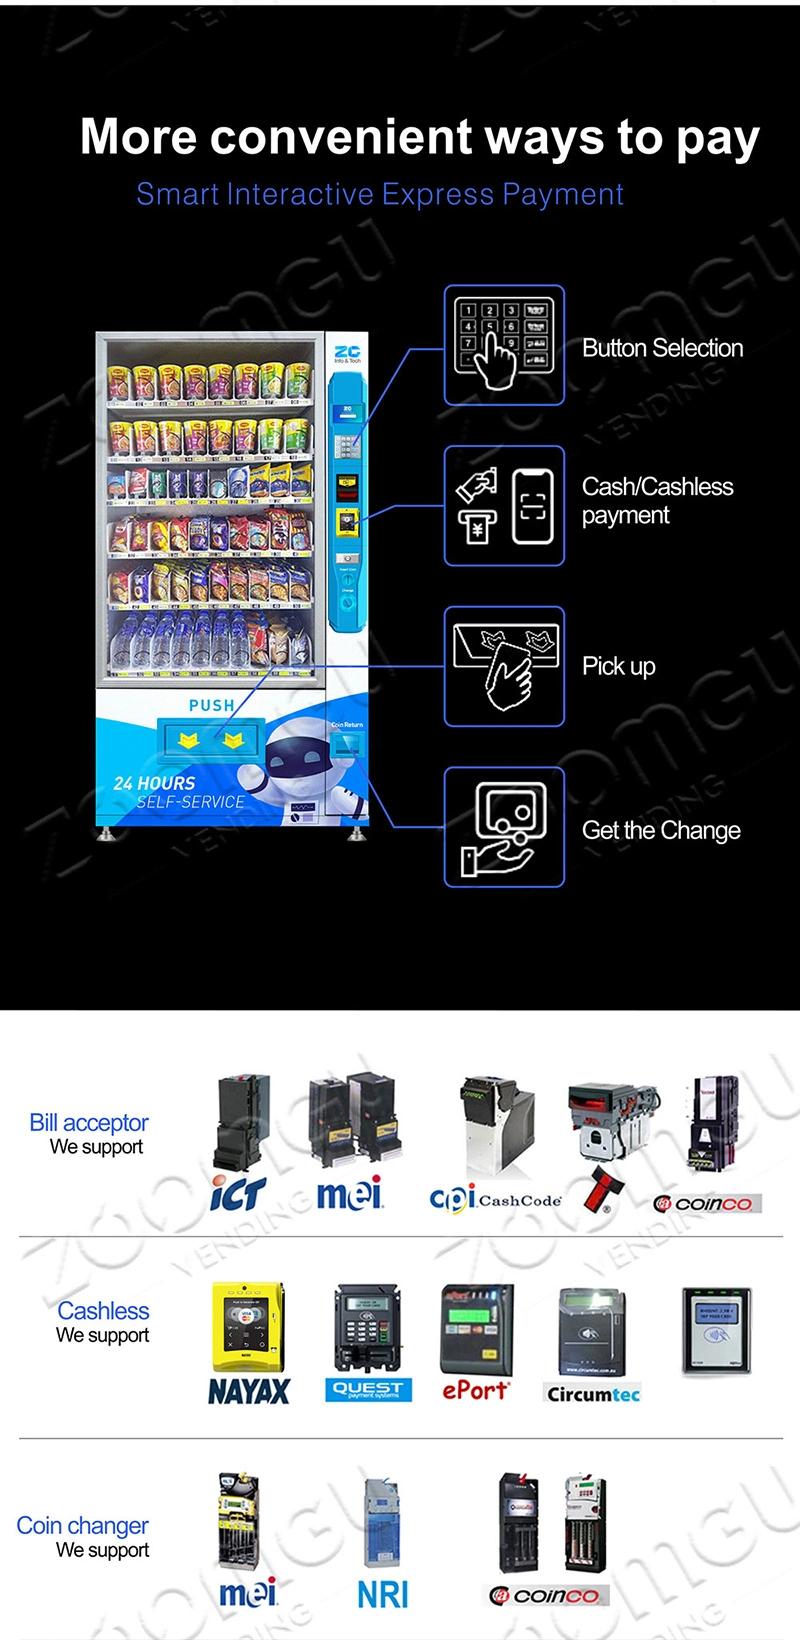 Zoomgu Snack Vending Machine Supplier